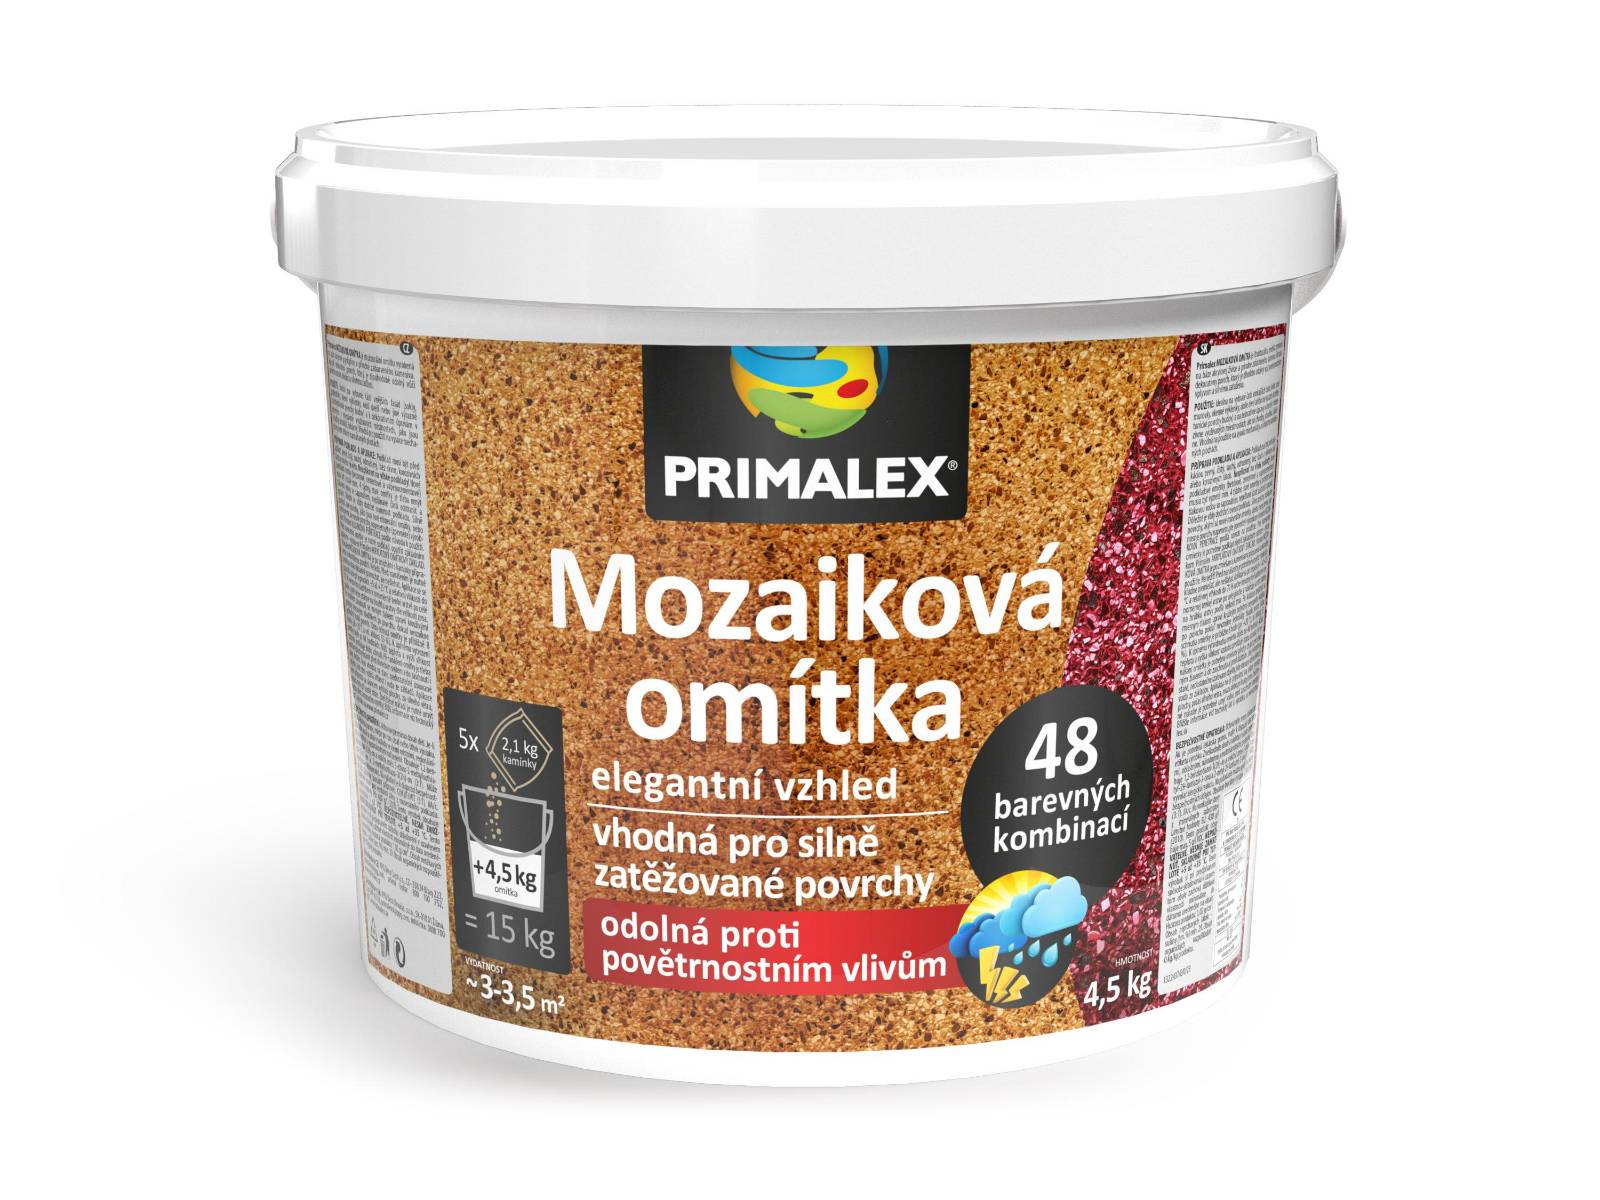 PRIMALEX Mozaiková omietka 15 kg (4.5 kg spojivo + 5 x 2.1 kg kameniva) mix farieb I+I+A+A+F